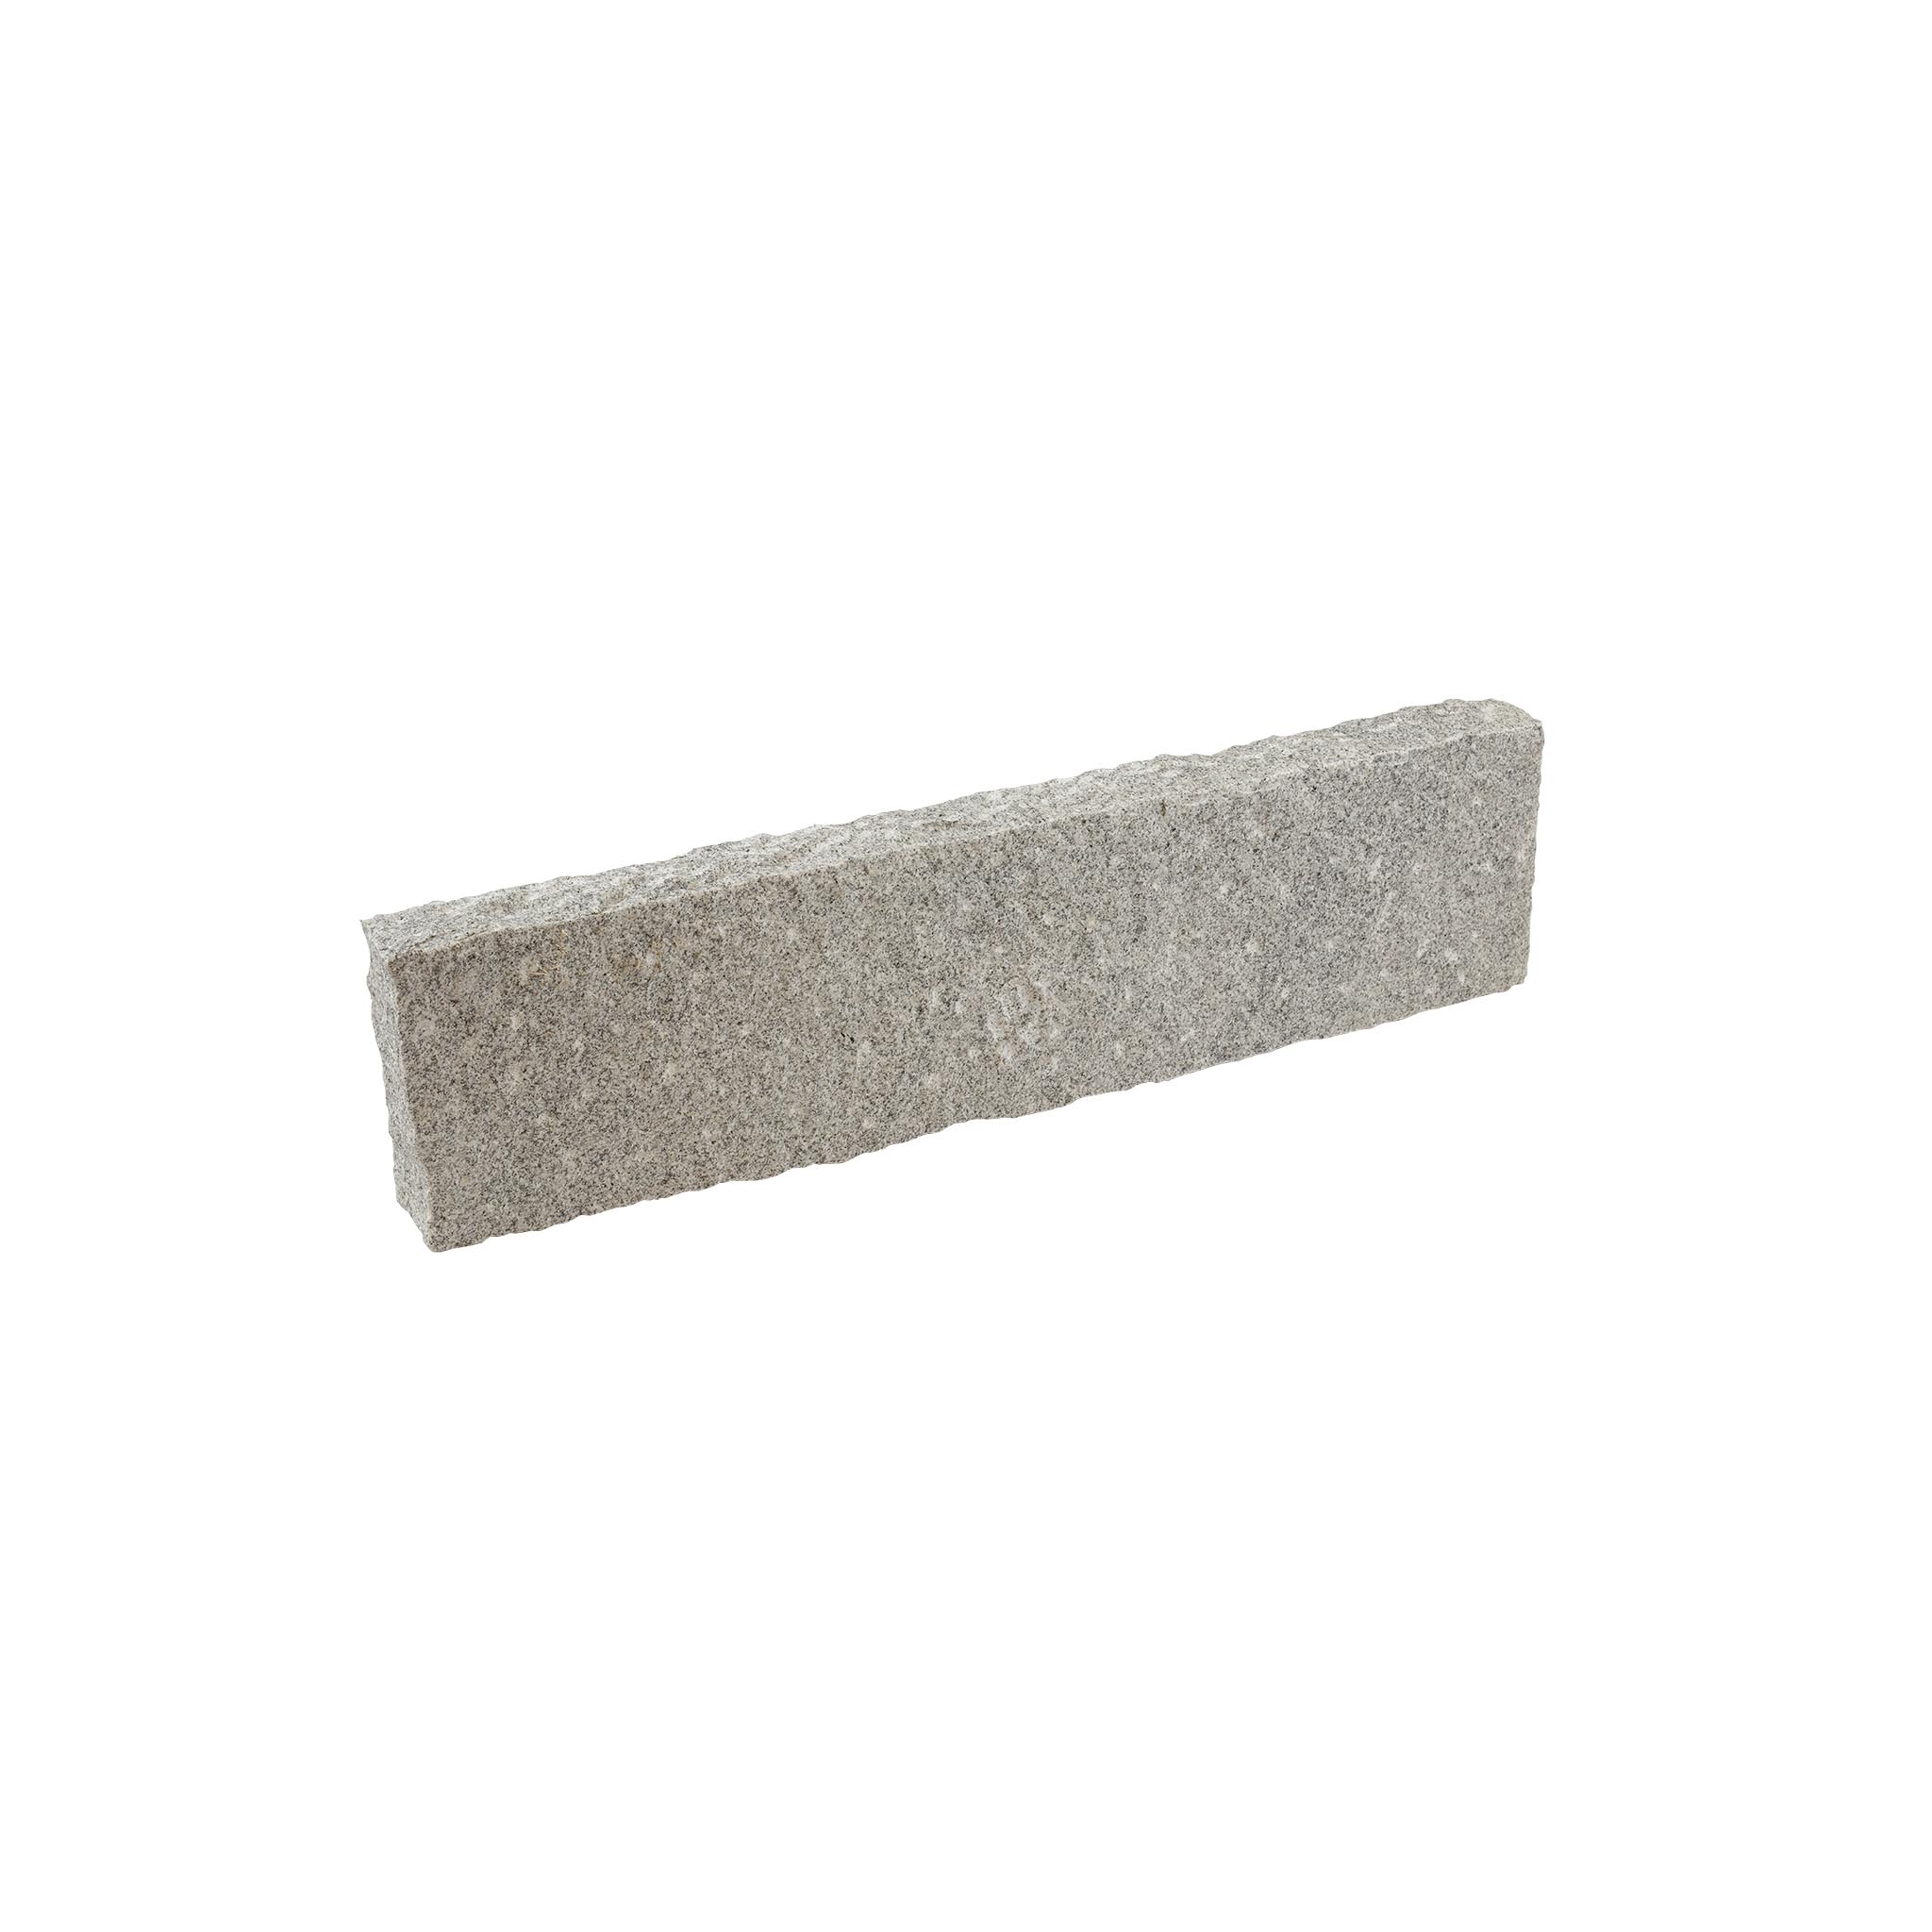 Palisaden, Granit grau (Pina) grob gestockt, Granit Palisade, 7–8 x 25 x 100 cm, G603, grau, grob gestockt